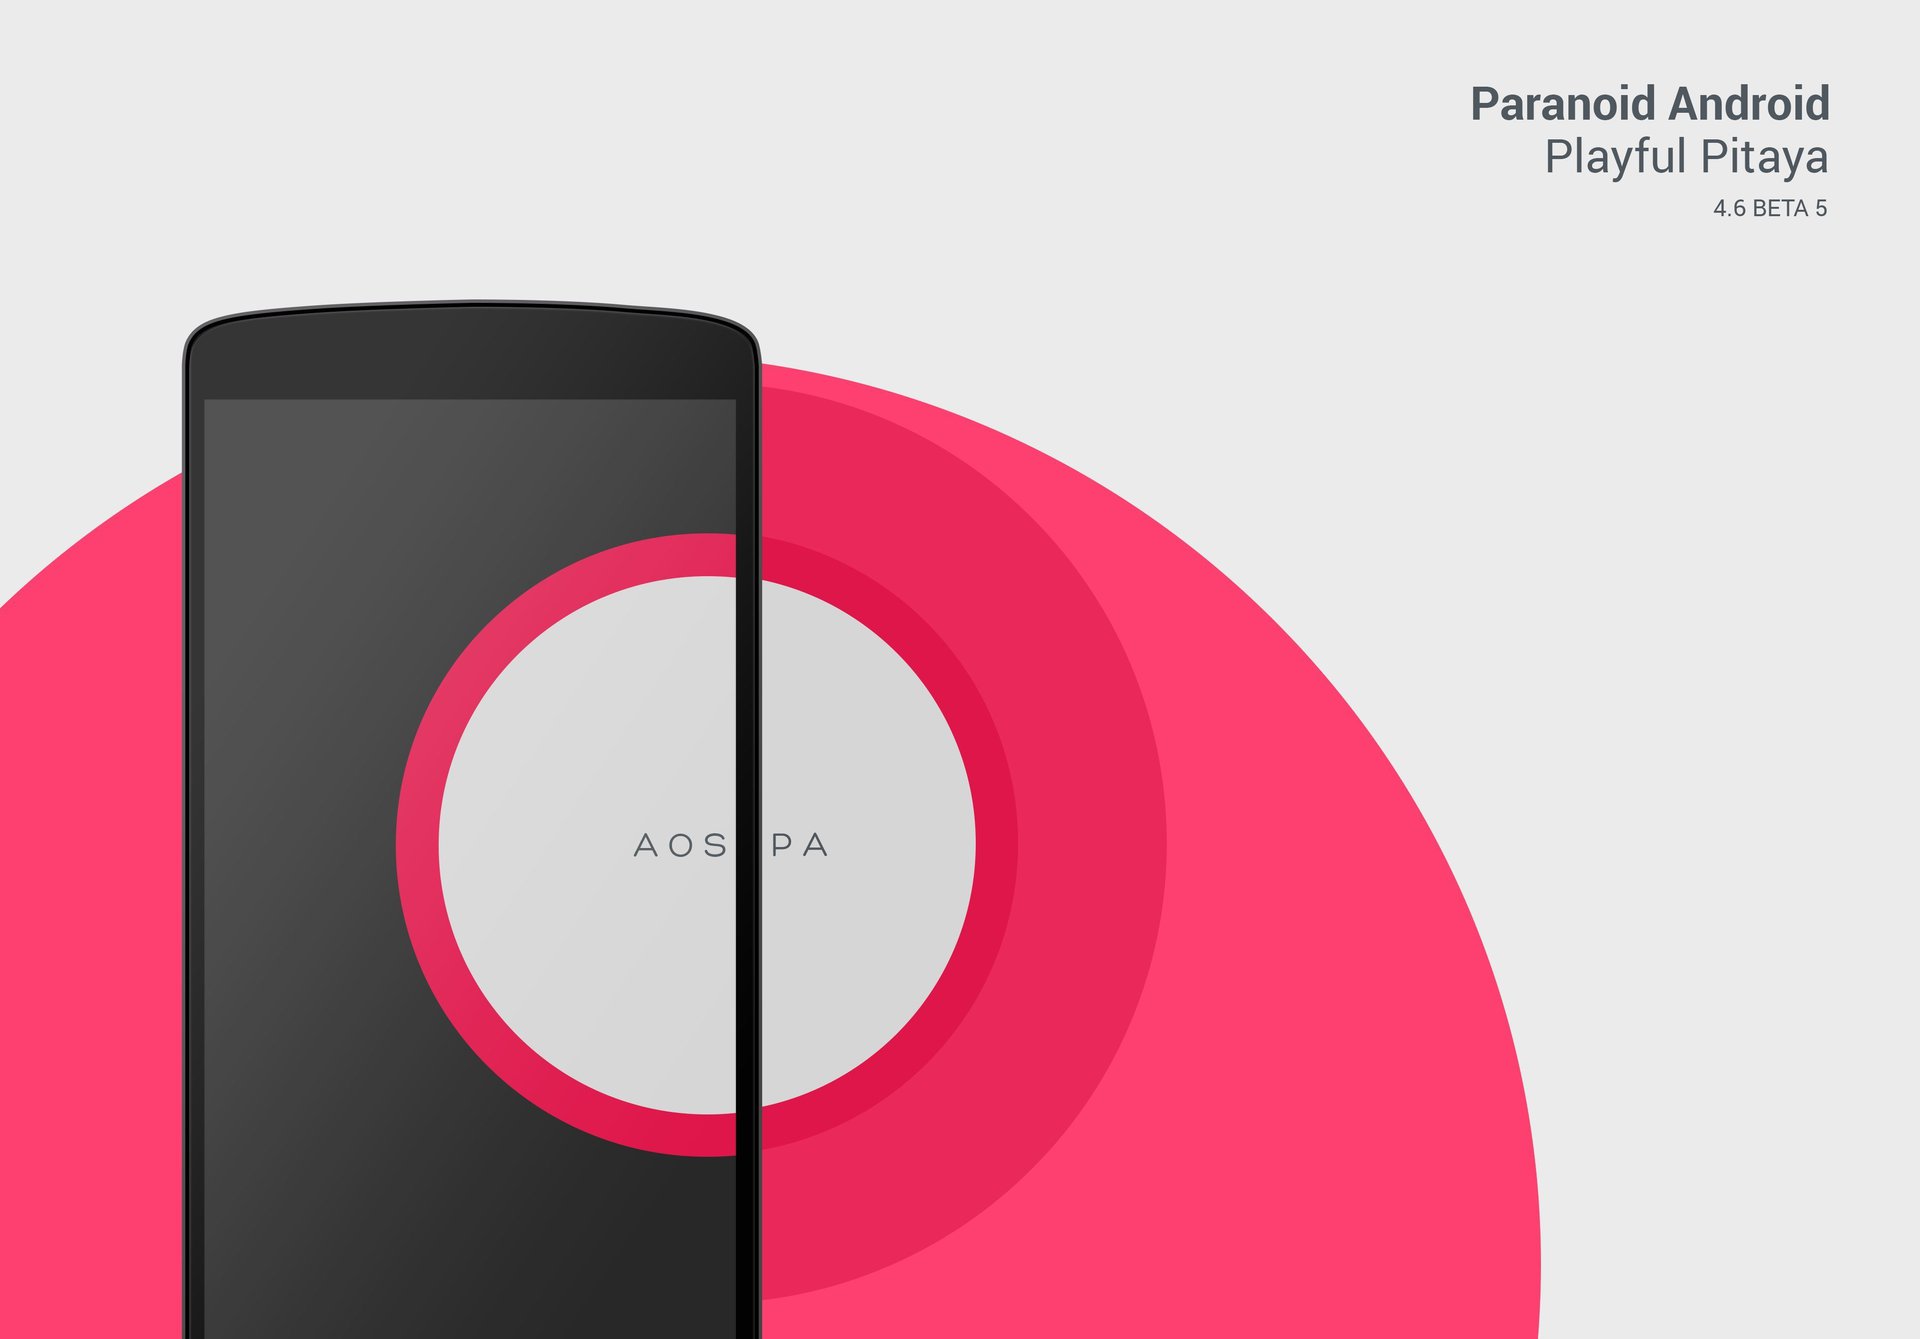 paranoid android 4.6 beta 5